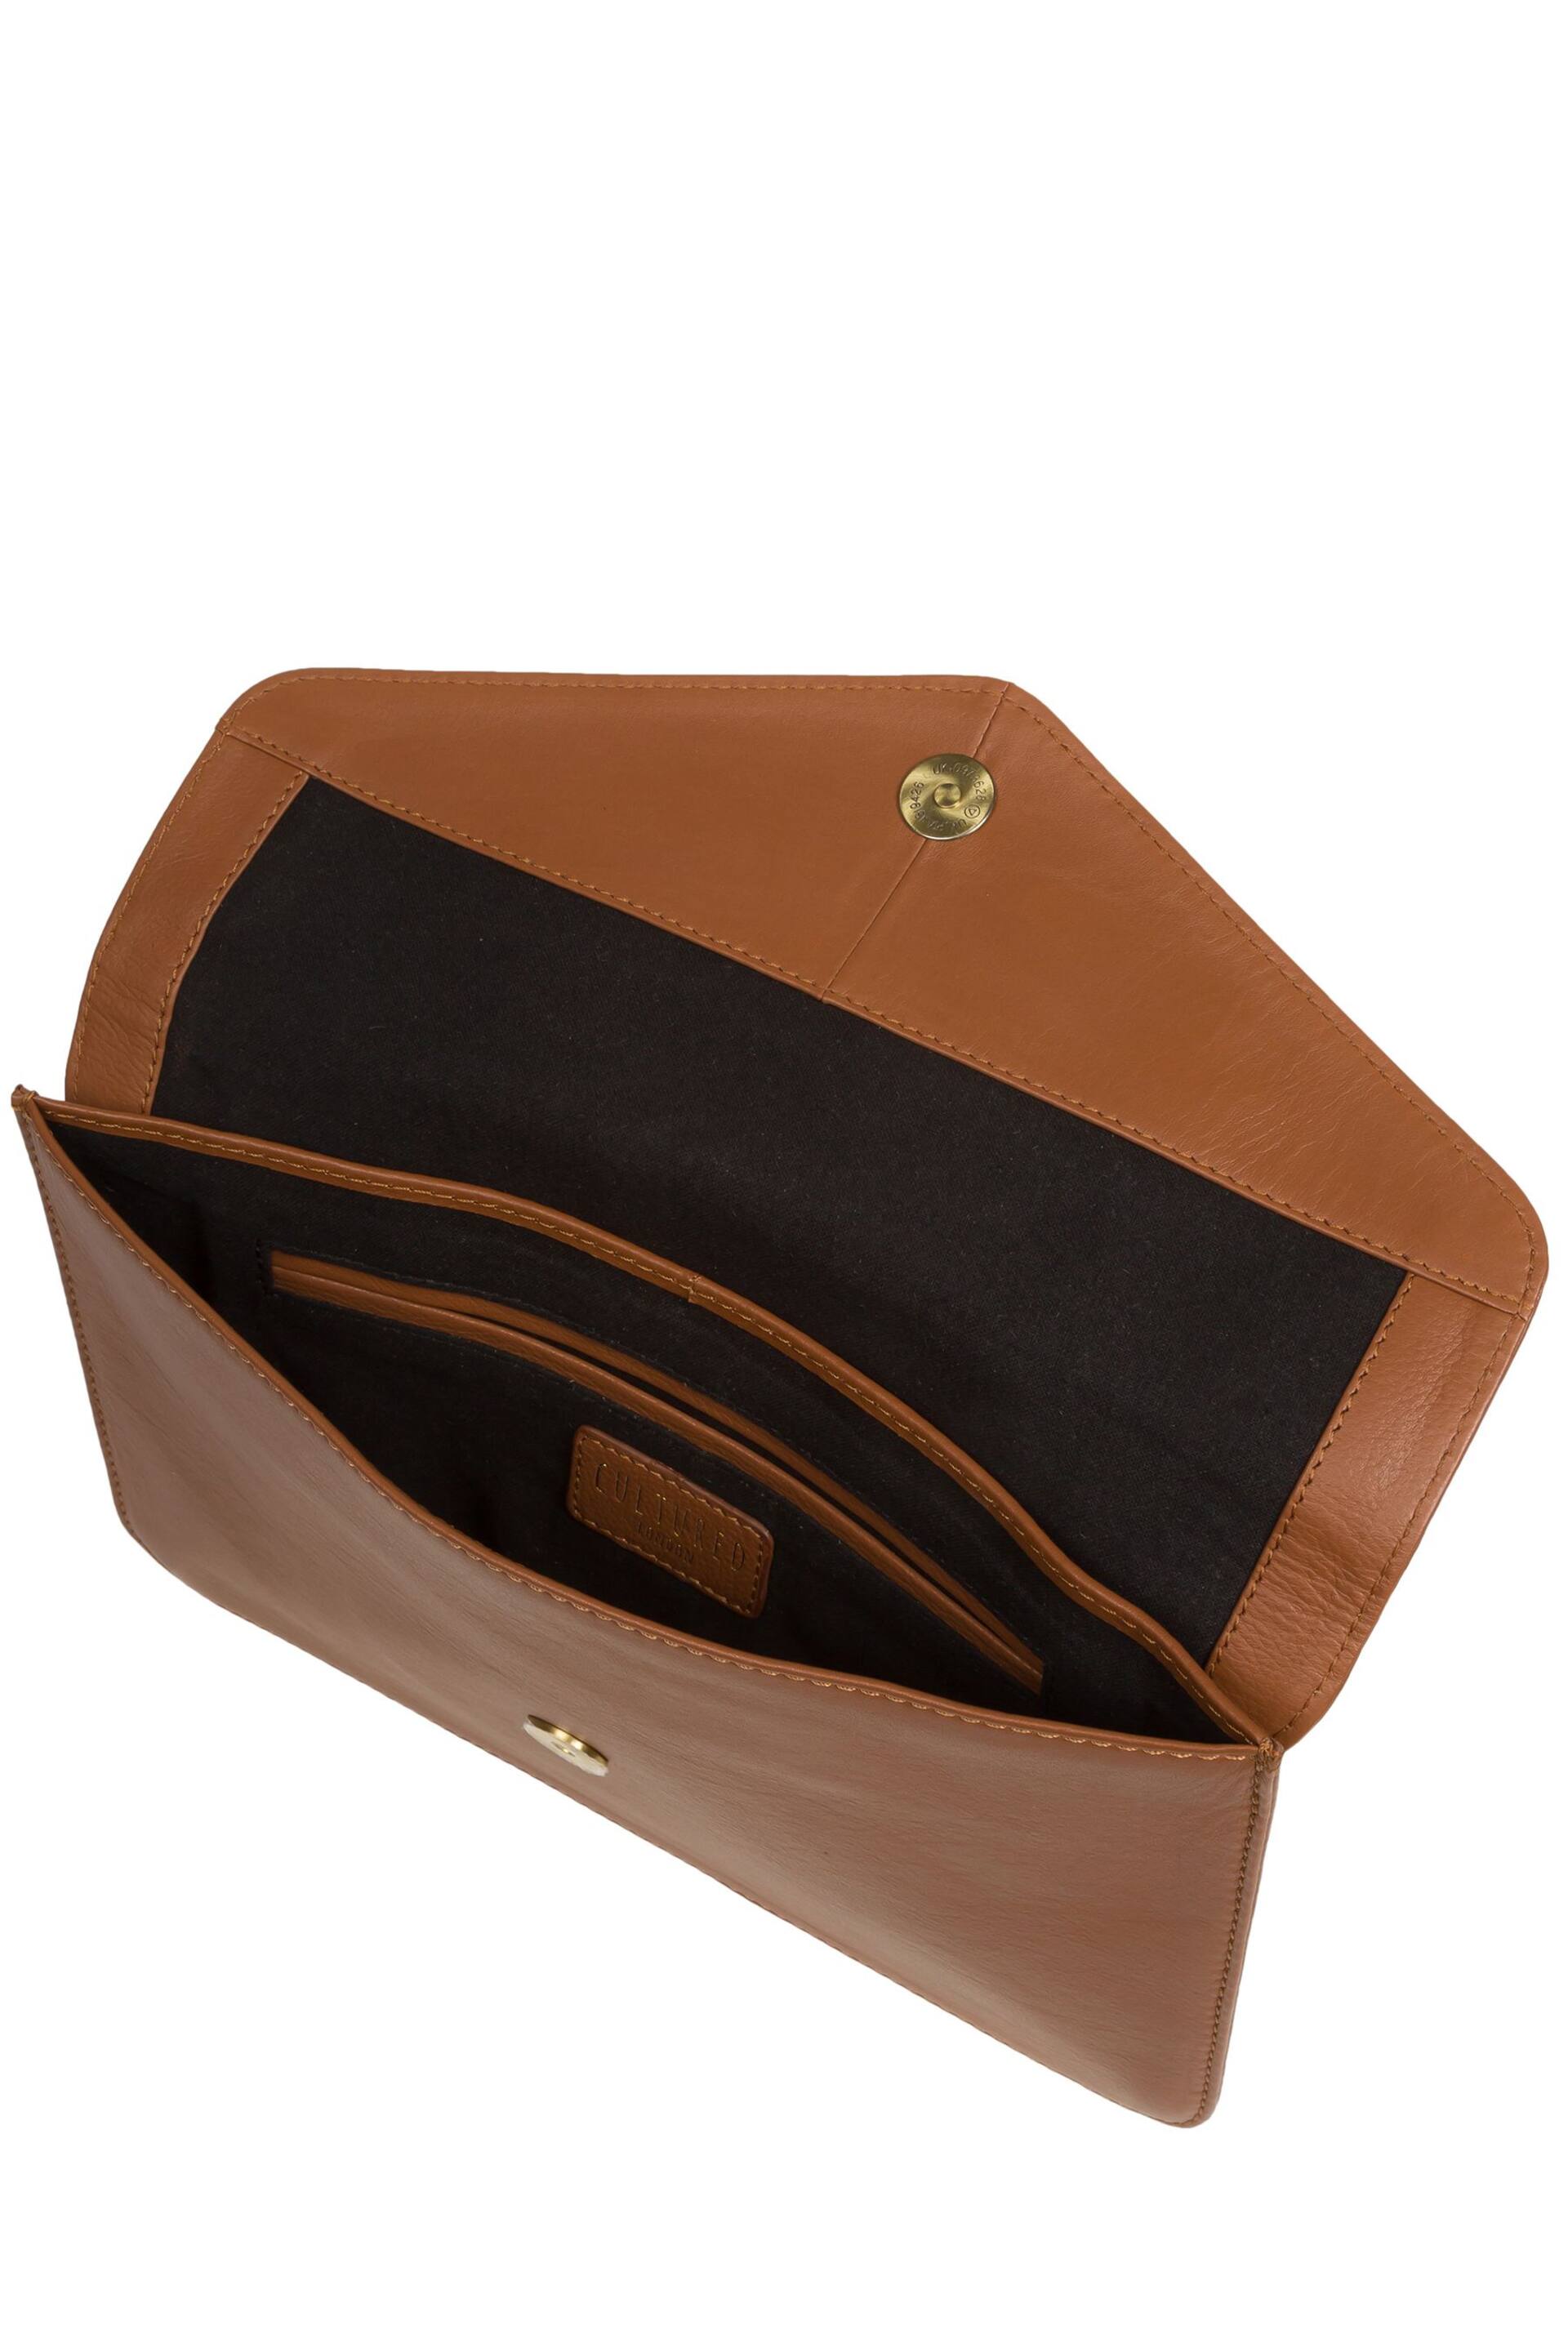 Cultured London Viviane Leather Clutch Bag - Image 4 of 6